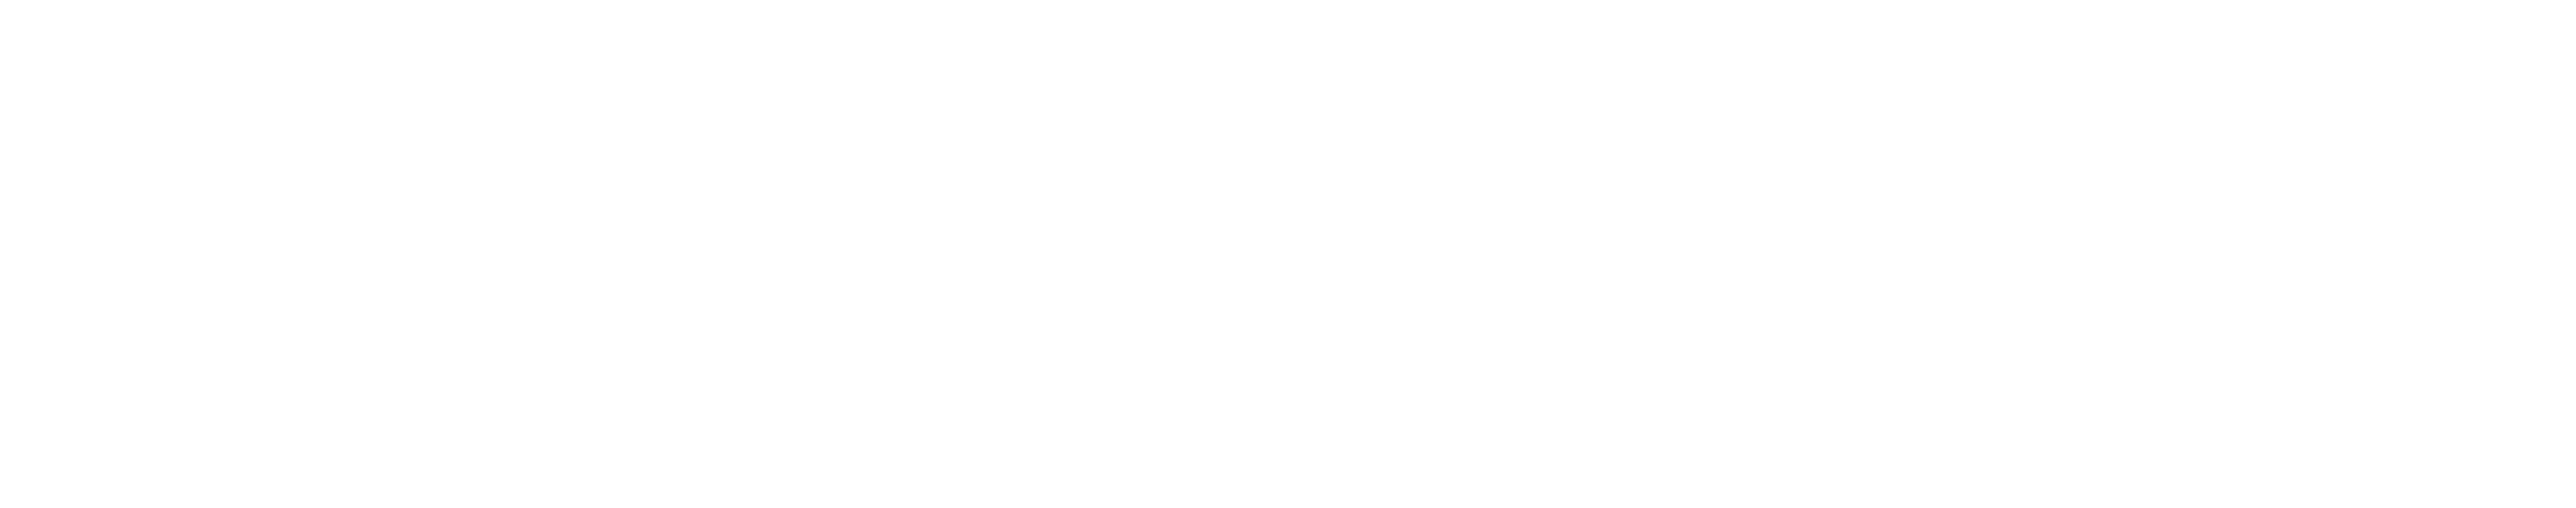 Middelkamp Digital Logo